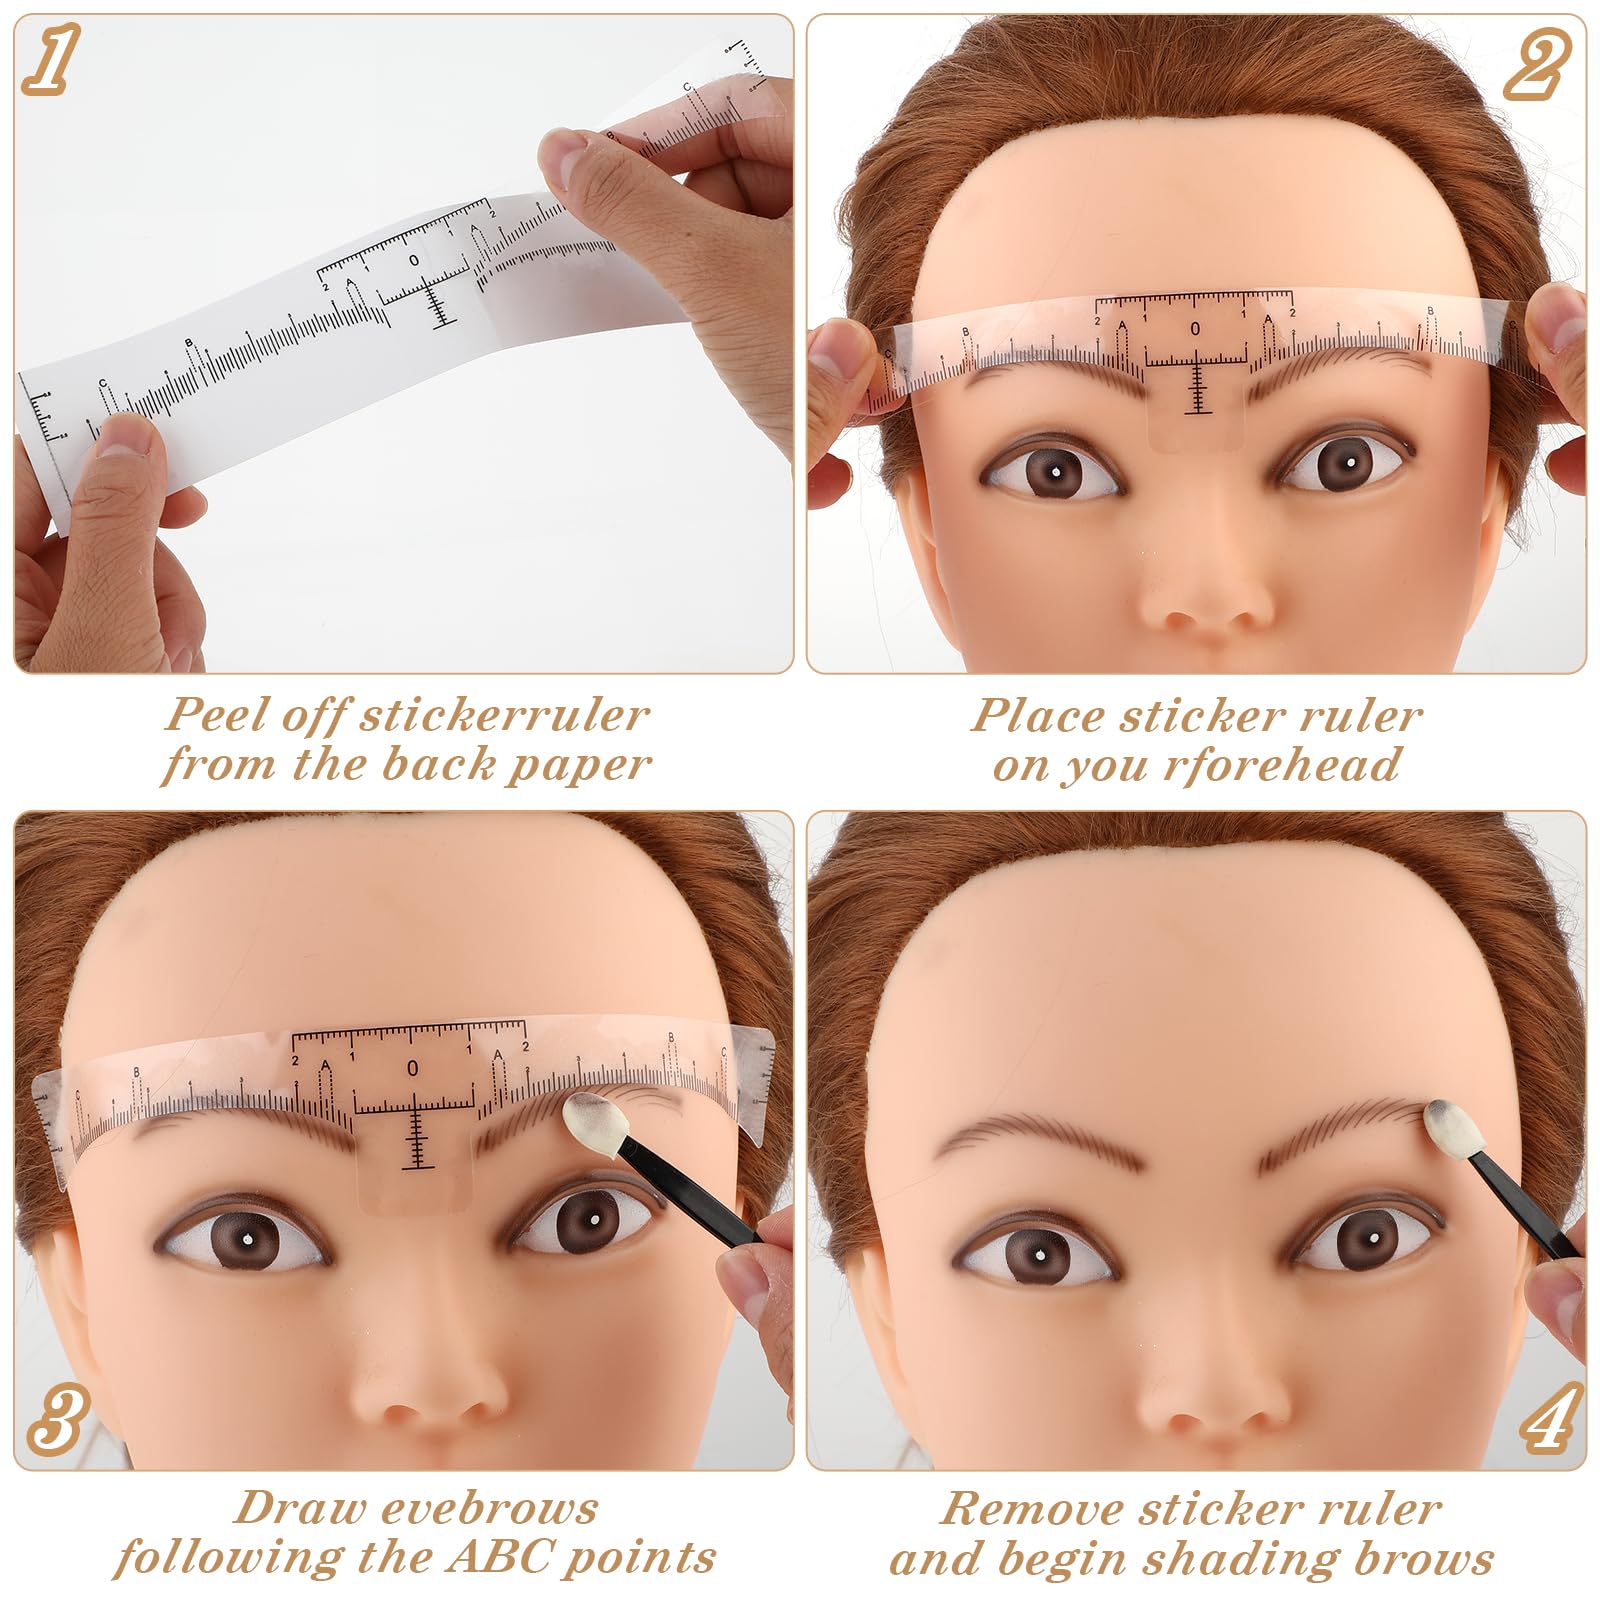 50 Pcs Eyebrow Ruler Stencils - Abeillo Disposable Brow Ruler Sticker, Microblading Eyebrow Template, Brow Measuring Shaper Tool, Eyebrow Mapping Makeup Tool